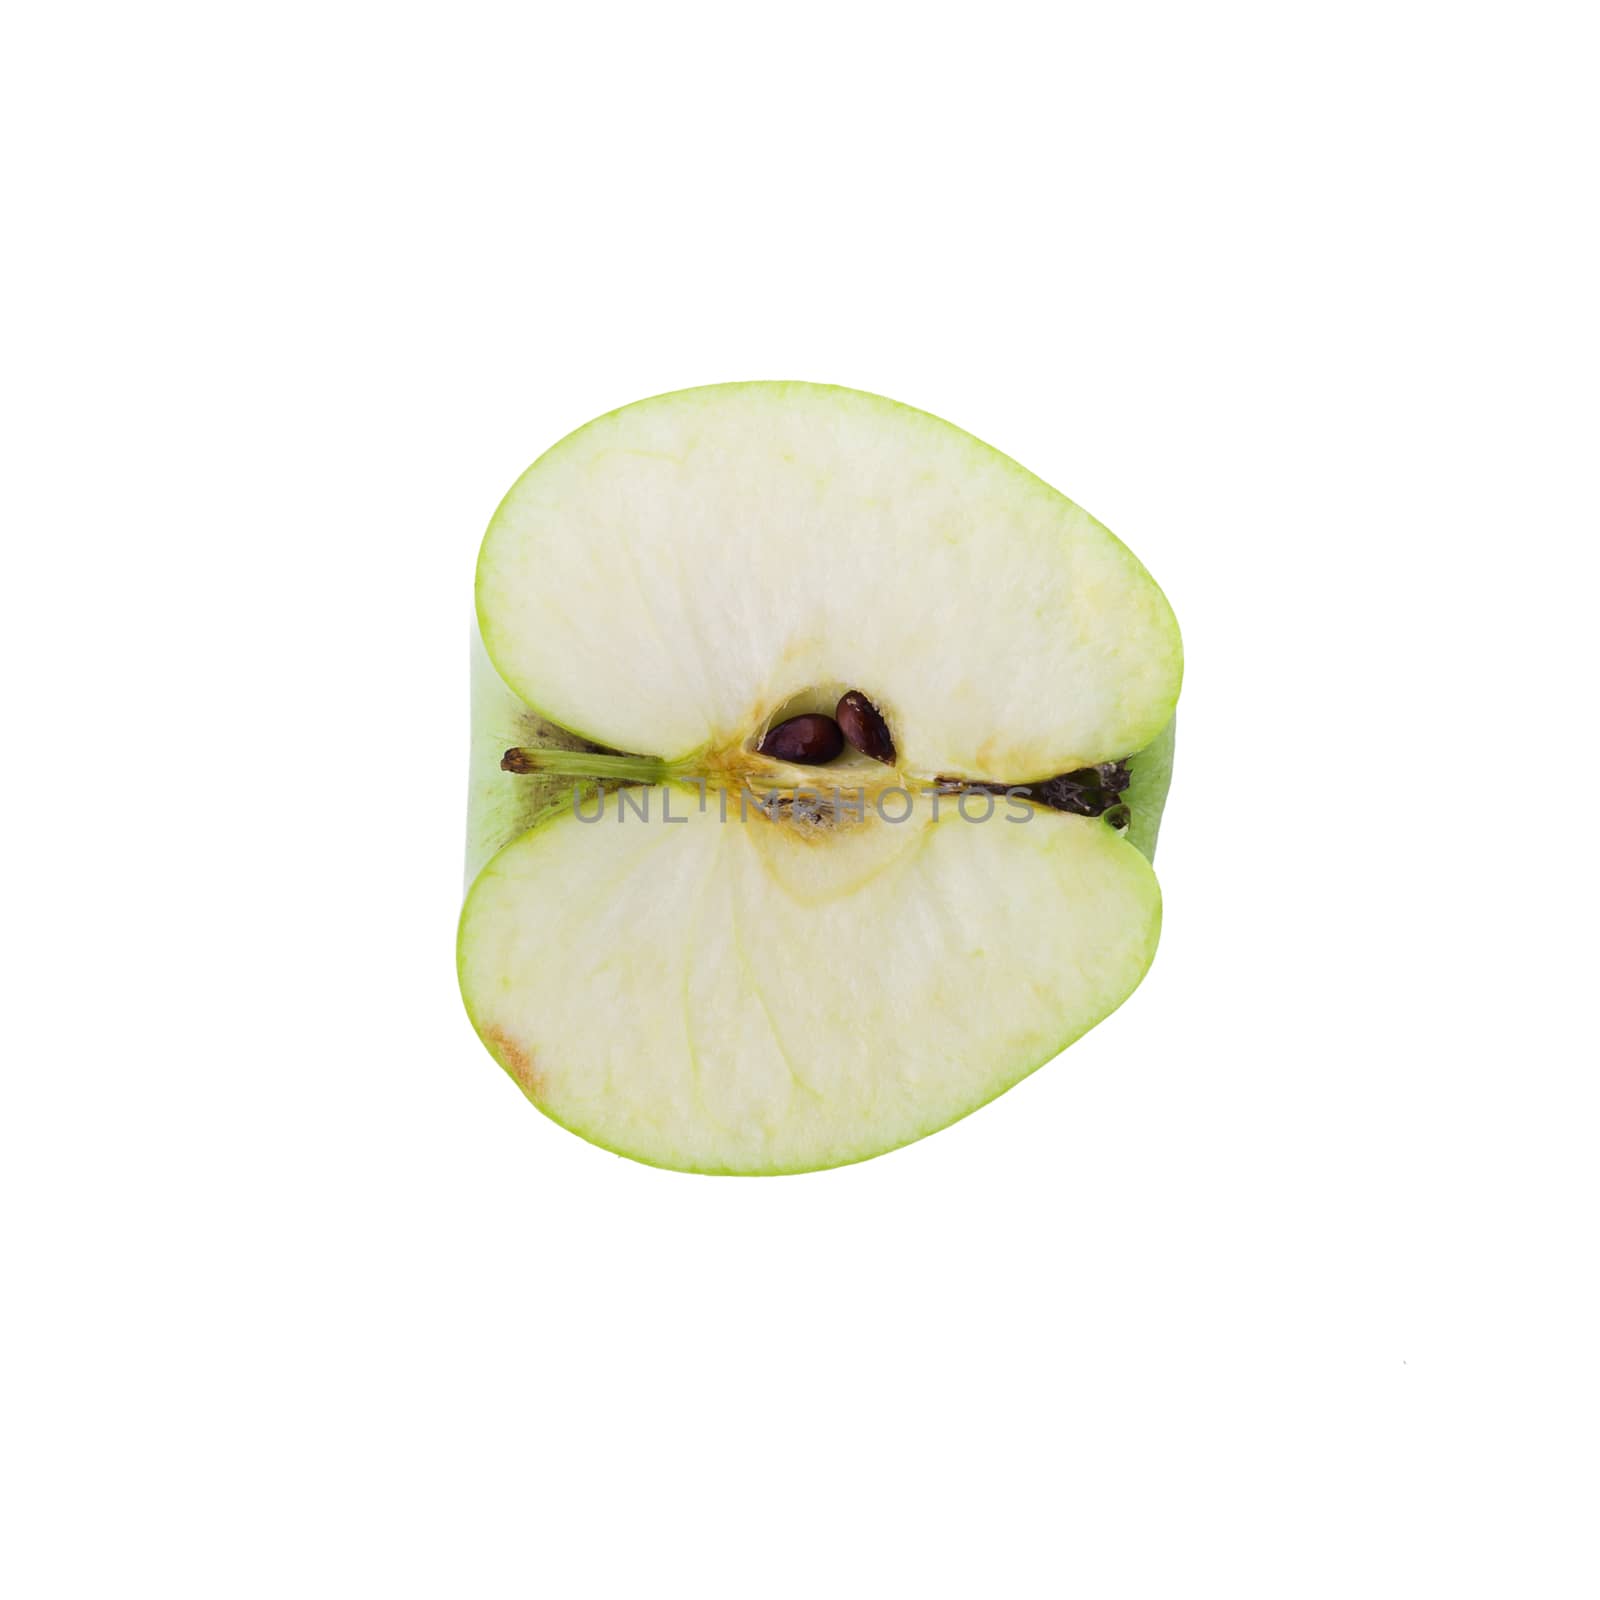 Fresh Green Apple Isolated on White Background.